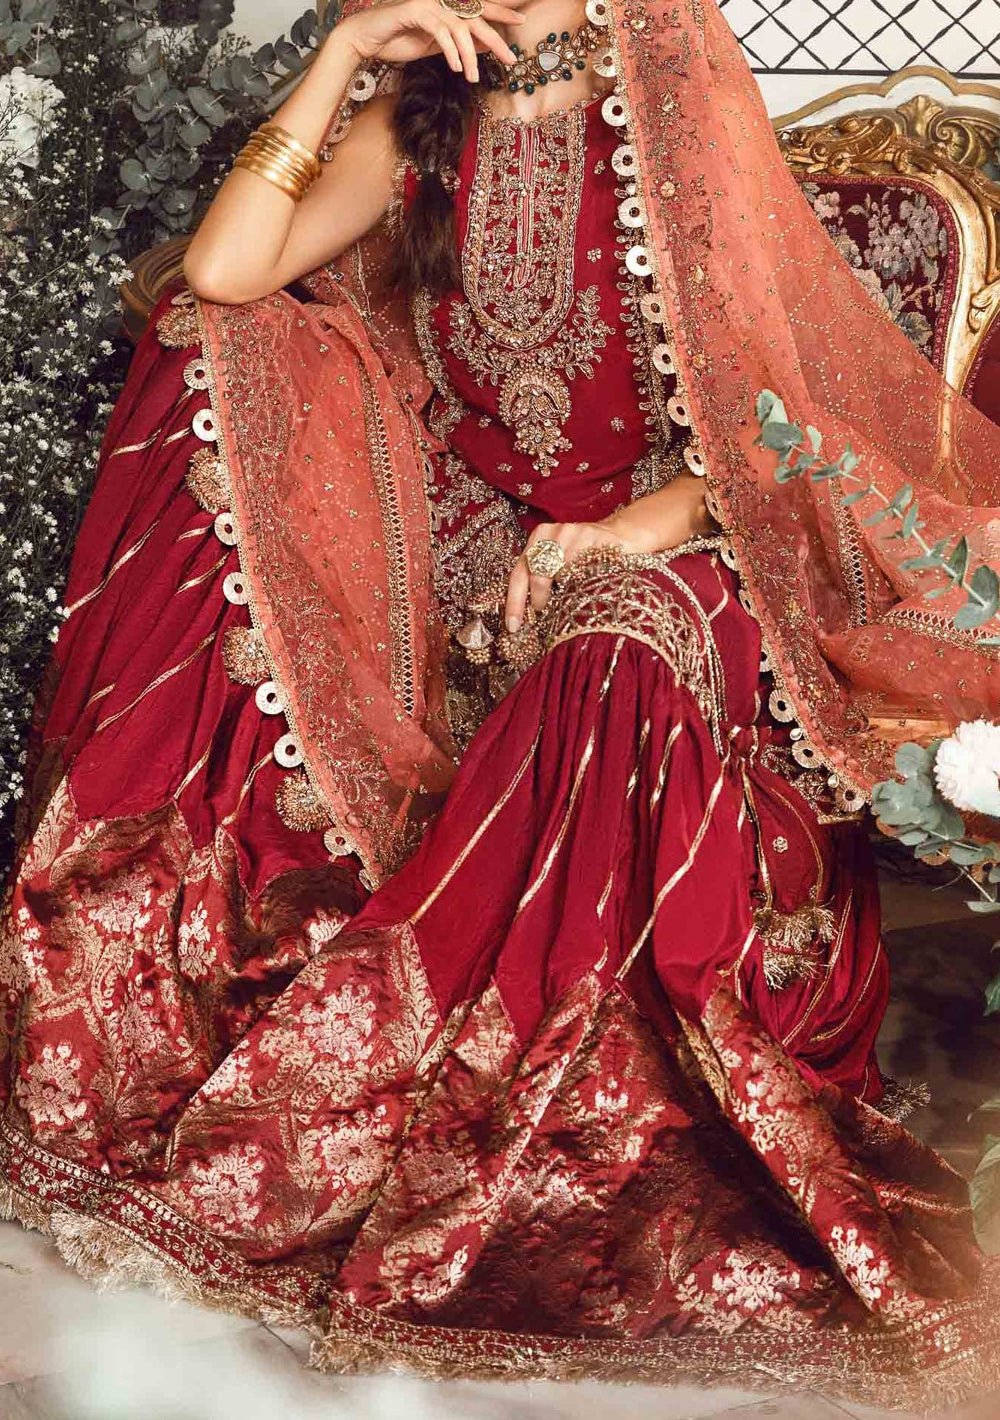 Maria.B Mbroidered Pakistani Luxury Organza Dress - db24599